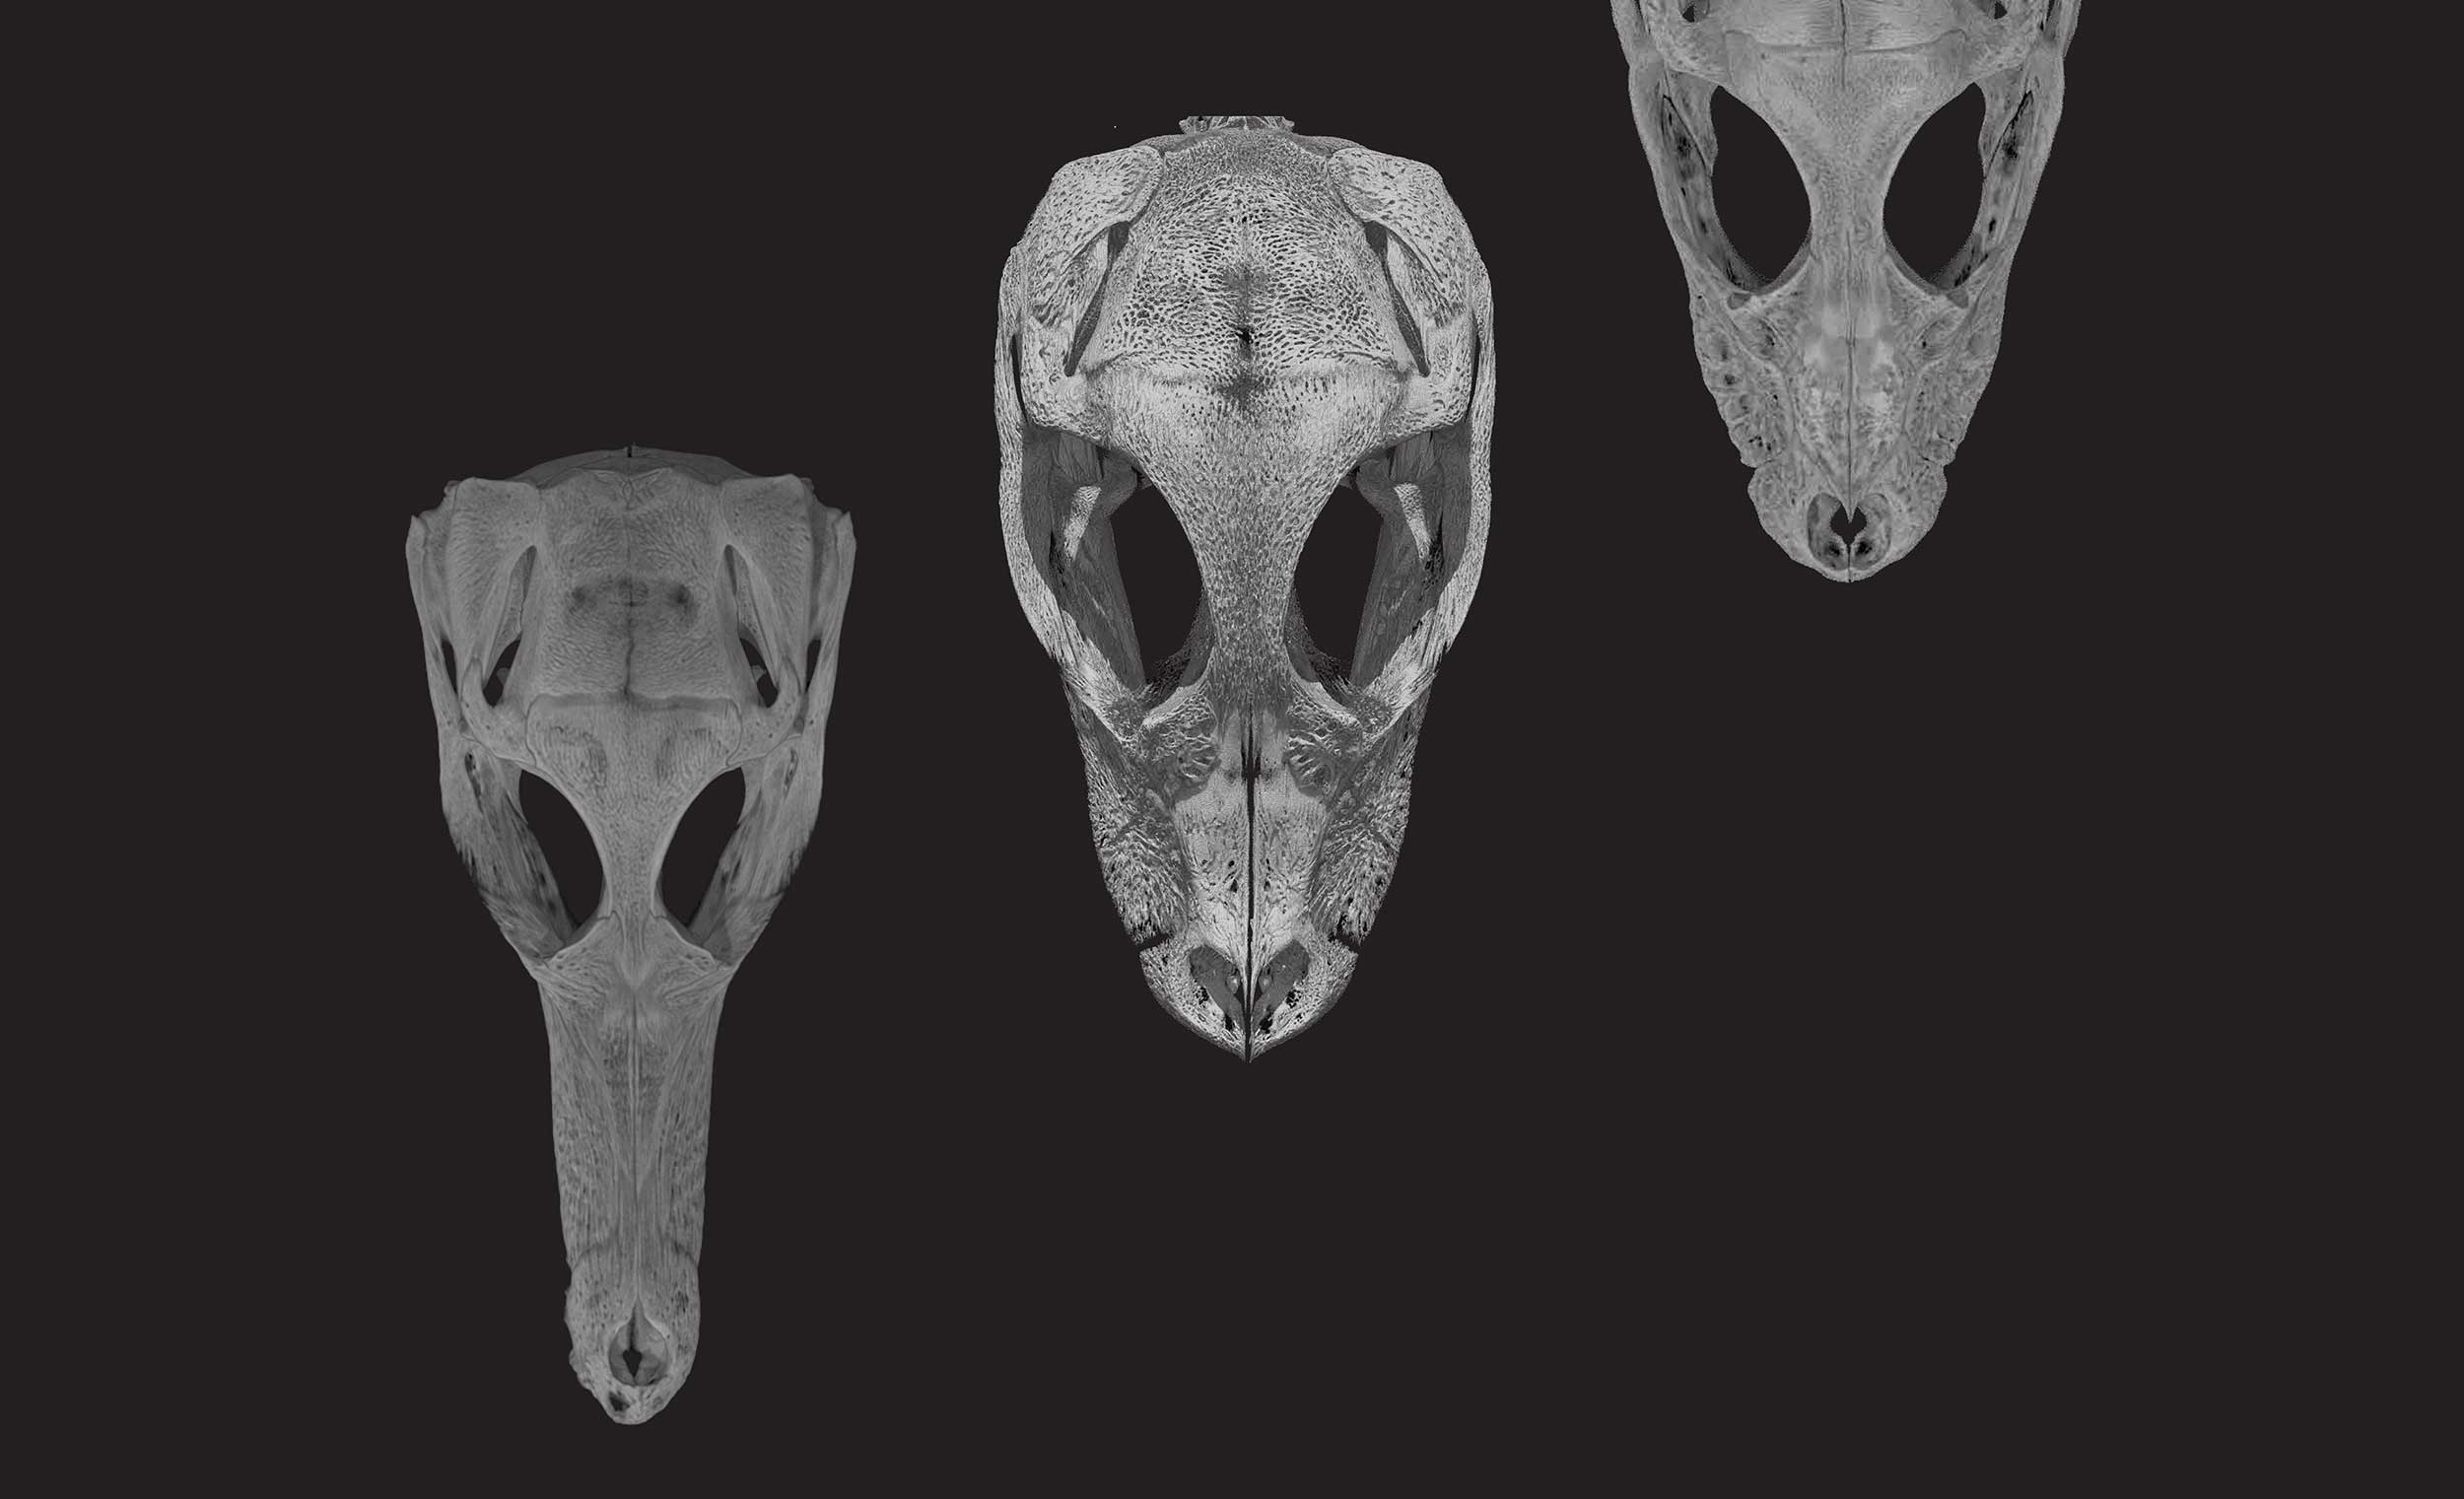 CT scans of crocodile skulls.